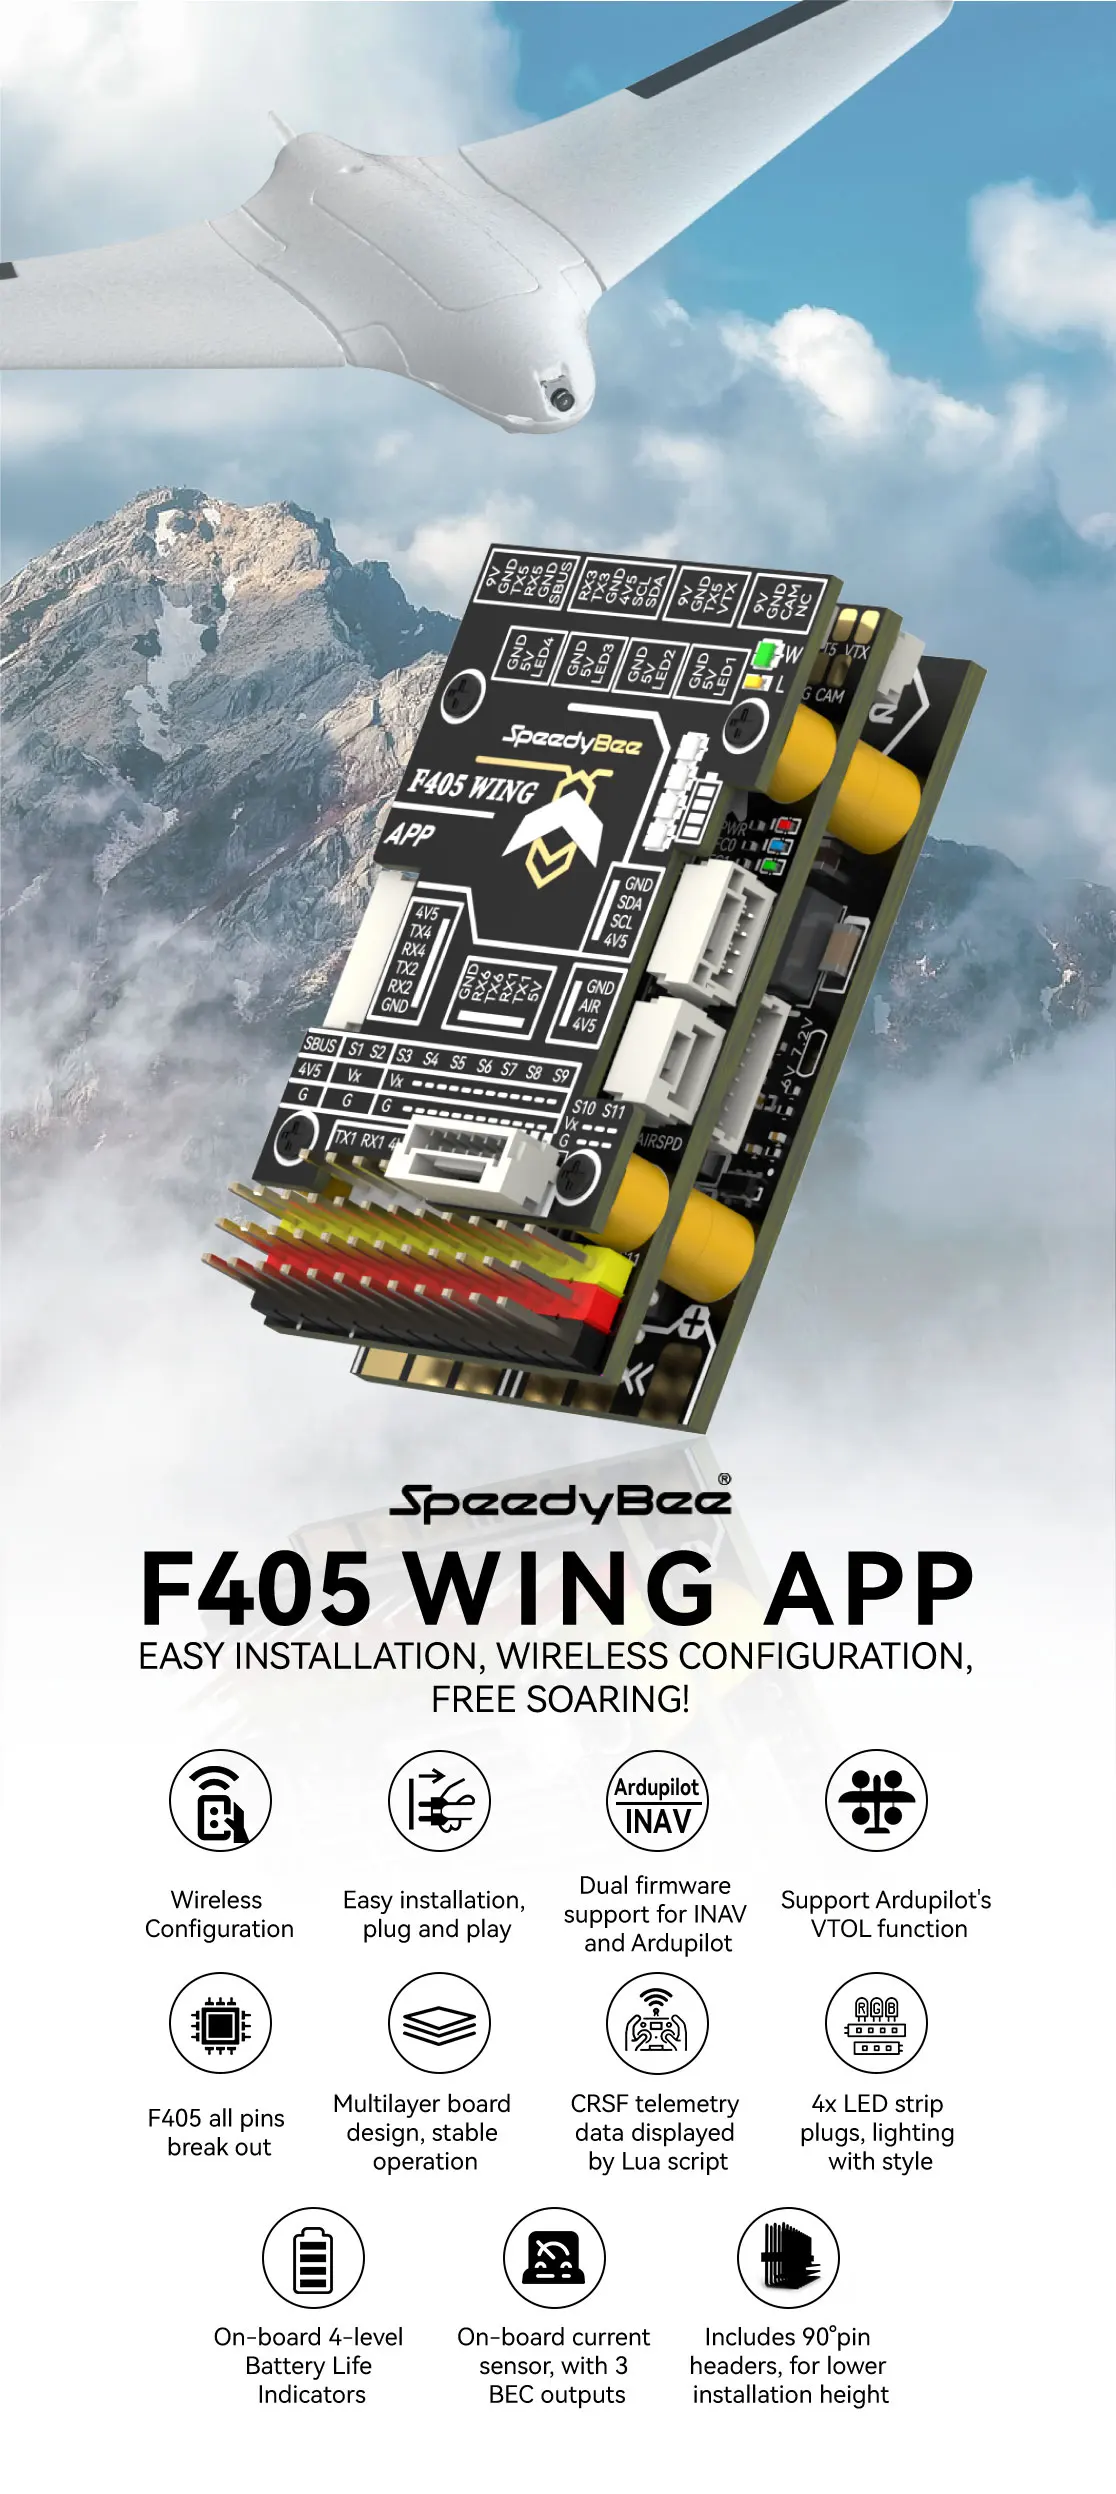 Speedybee f405 wing